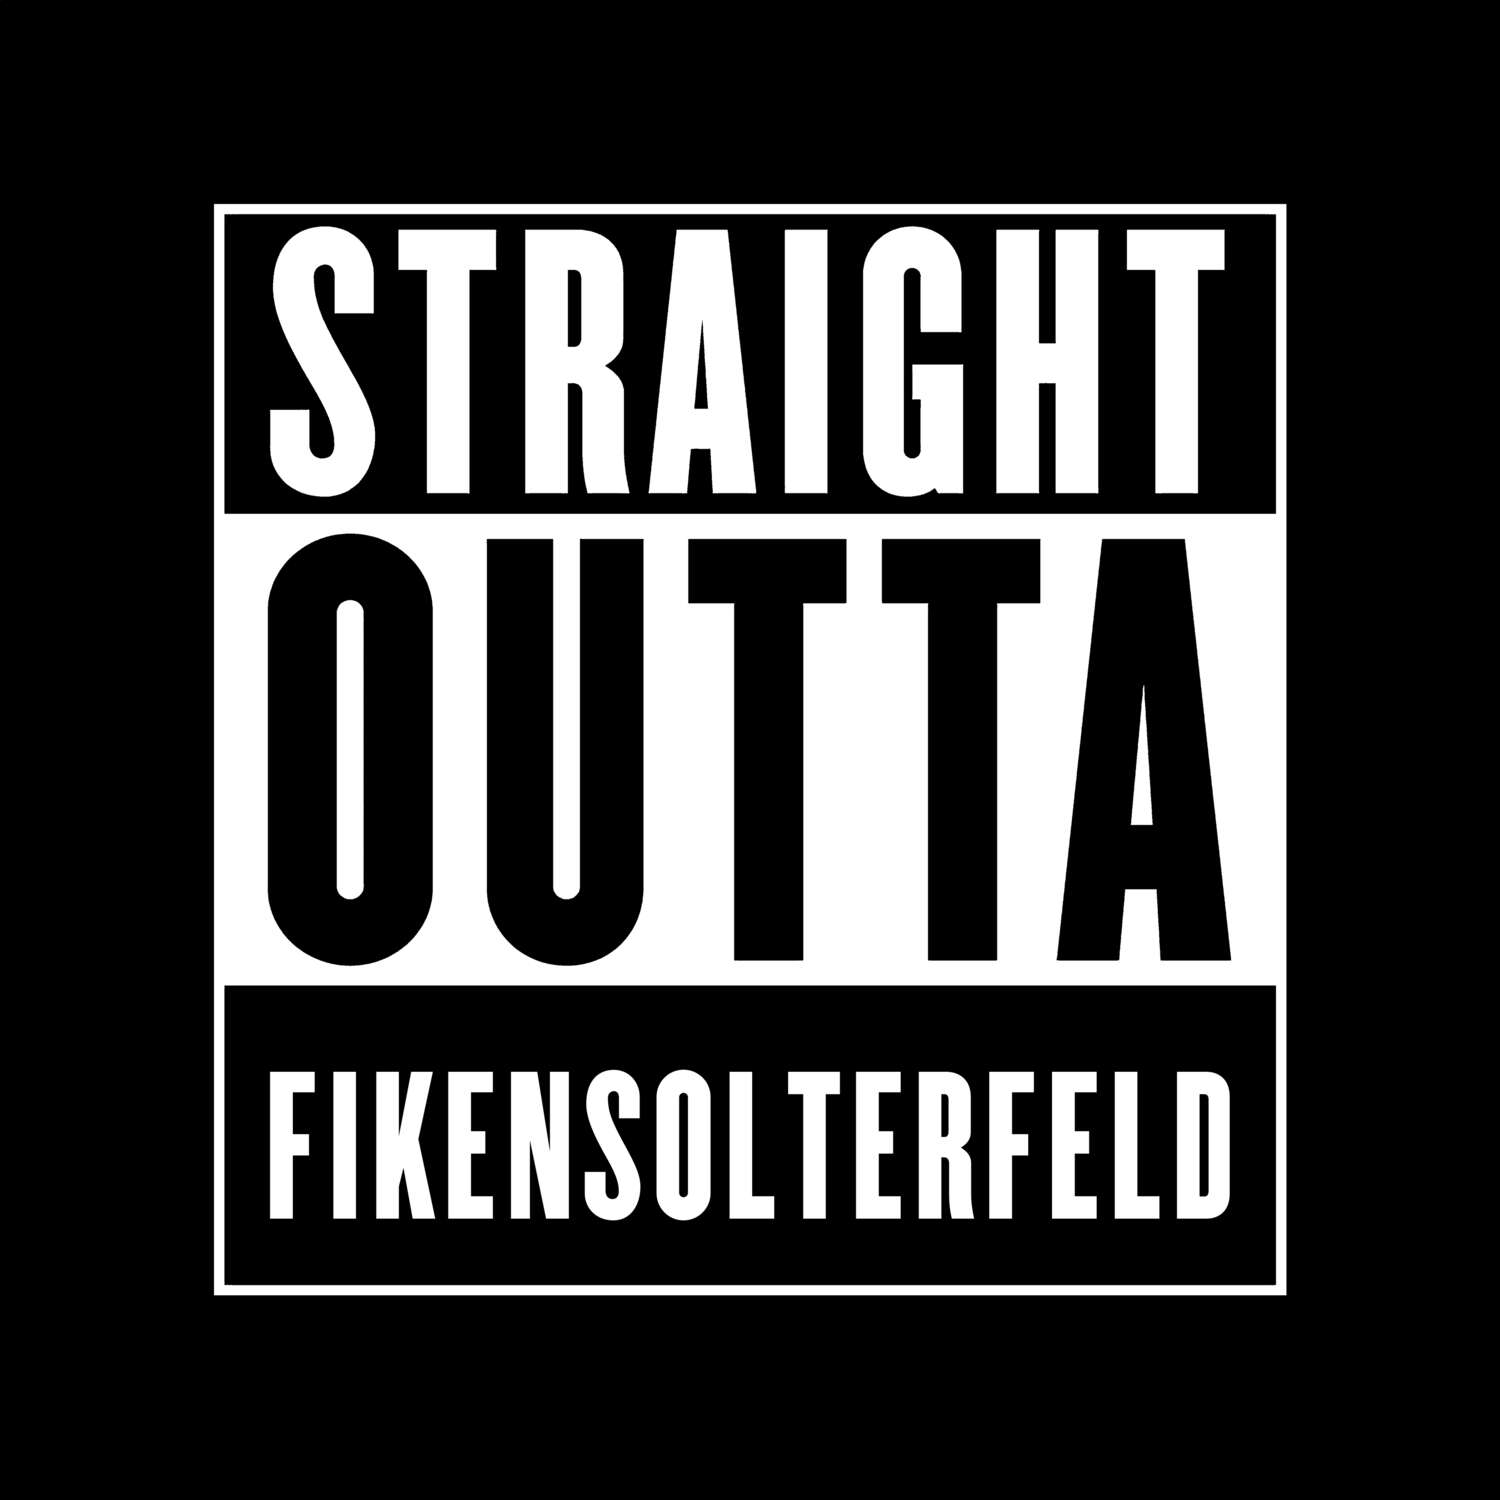 Fikensolterfeld T-Shirt »Straight Outta«